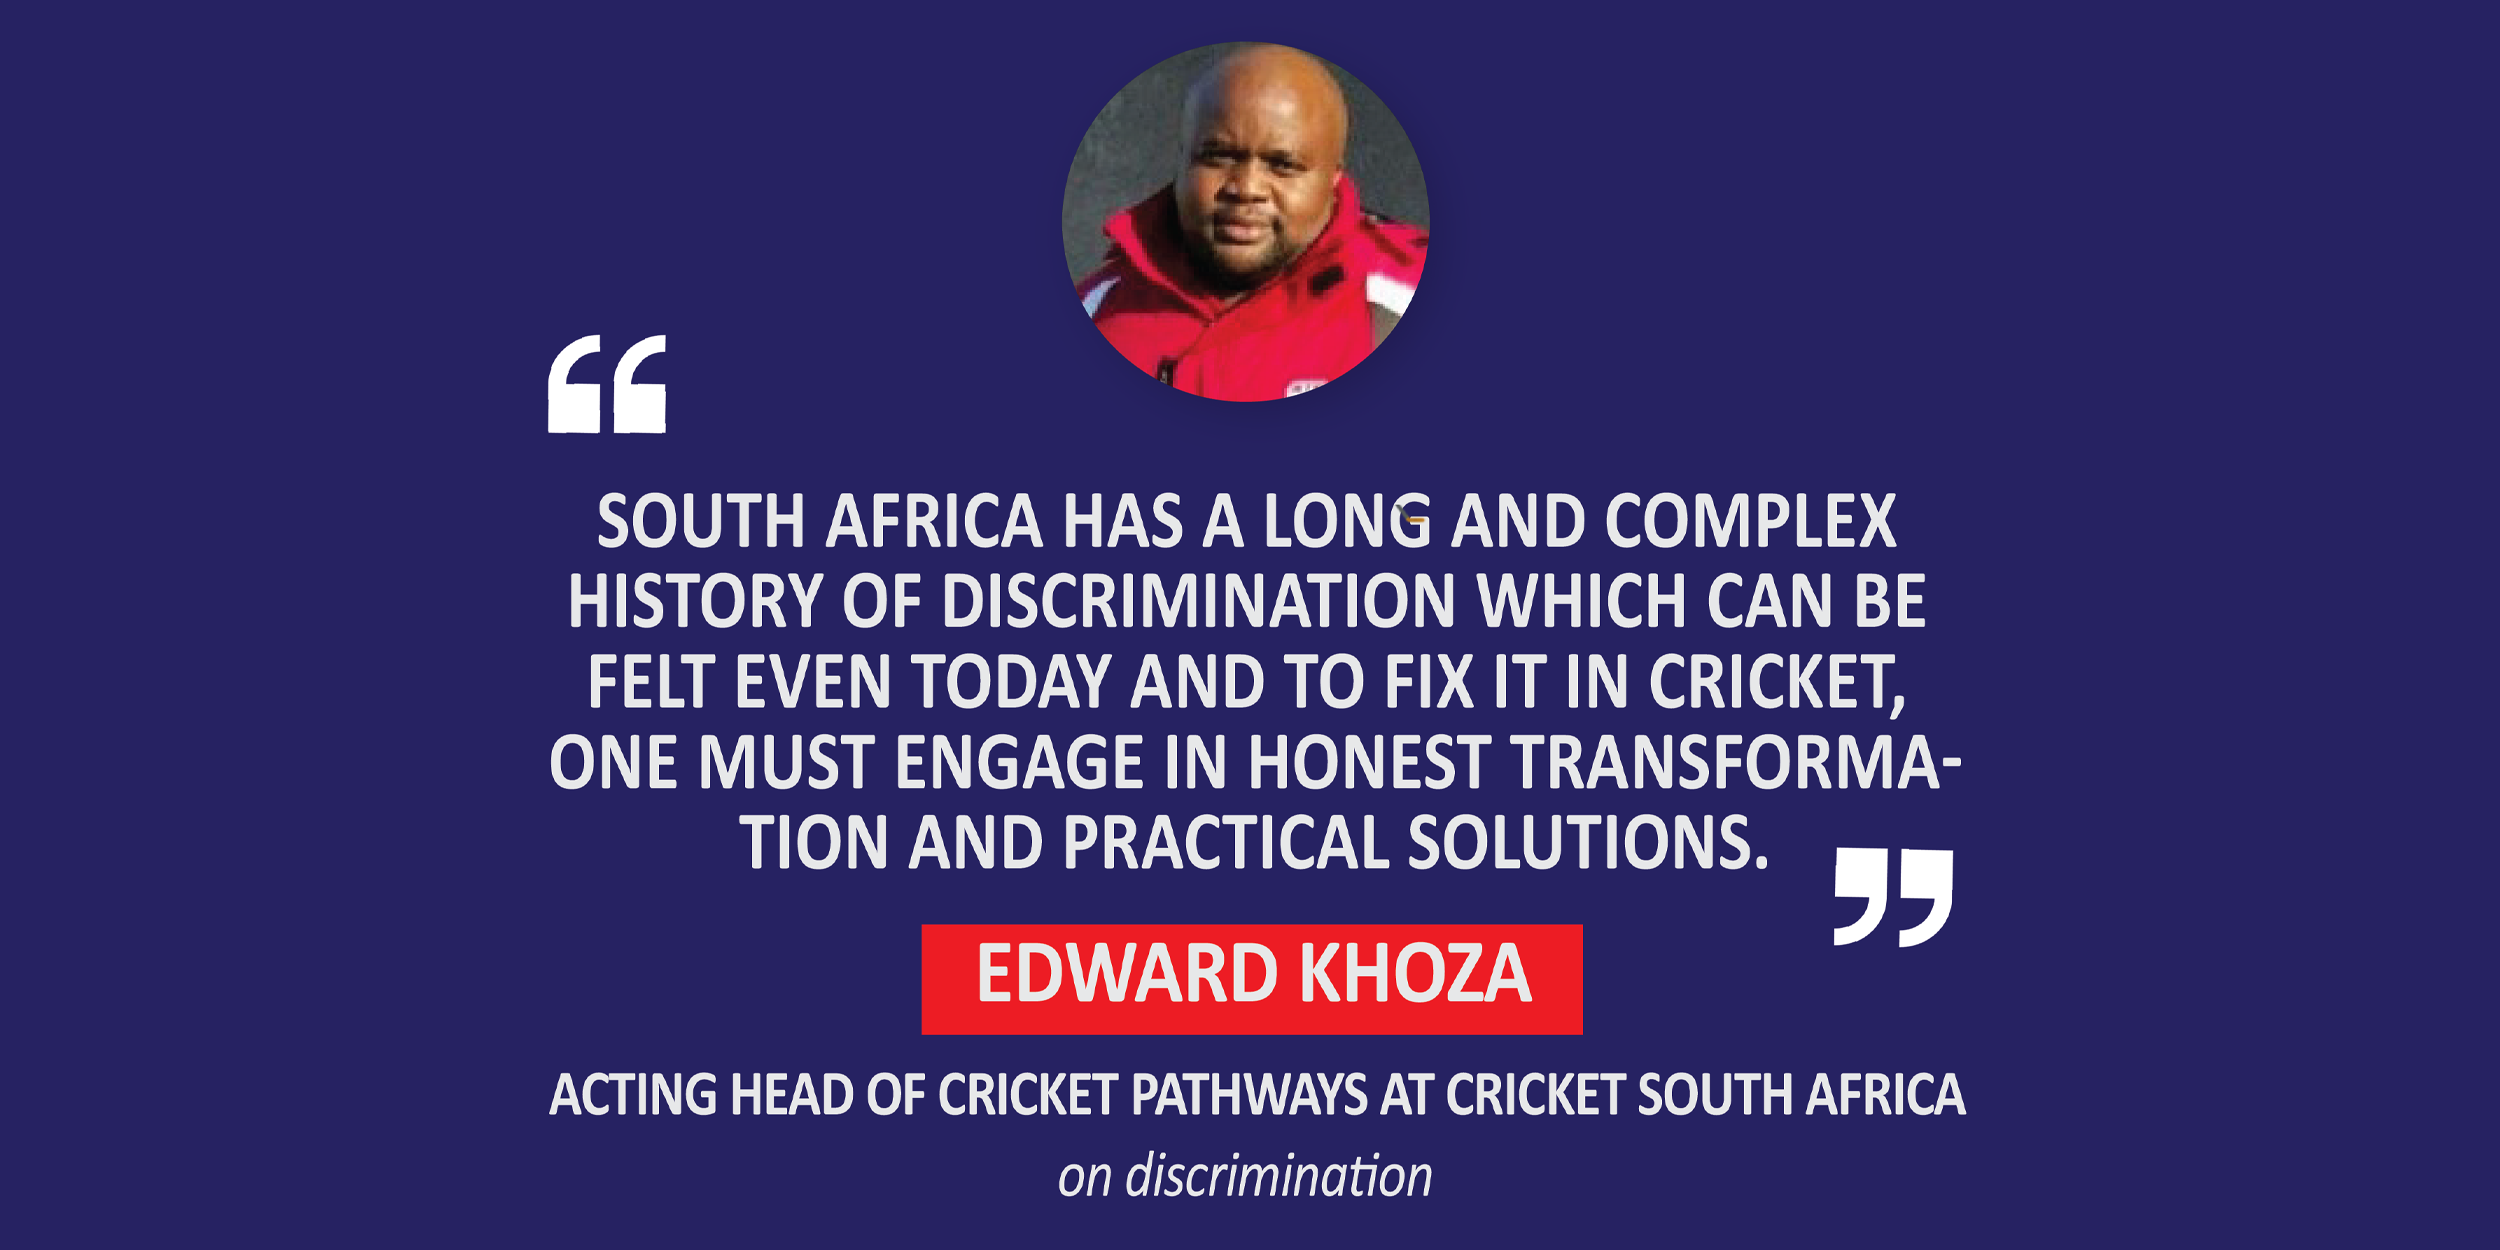 Edward Khoza, Acting Head of Cricket Pathways at Cricket South Africa on discrimination